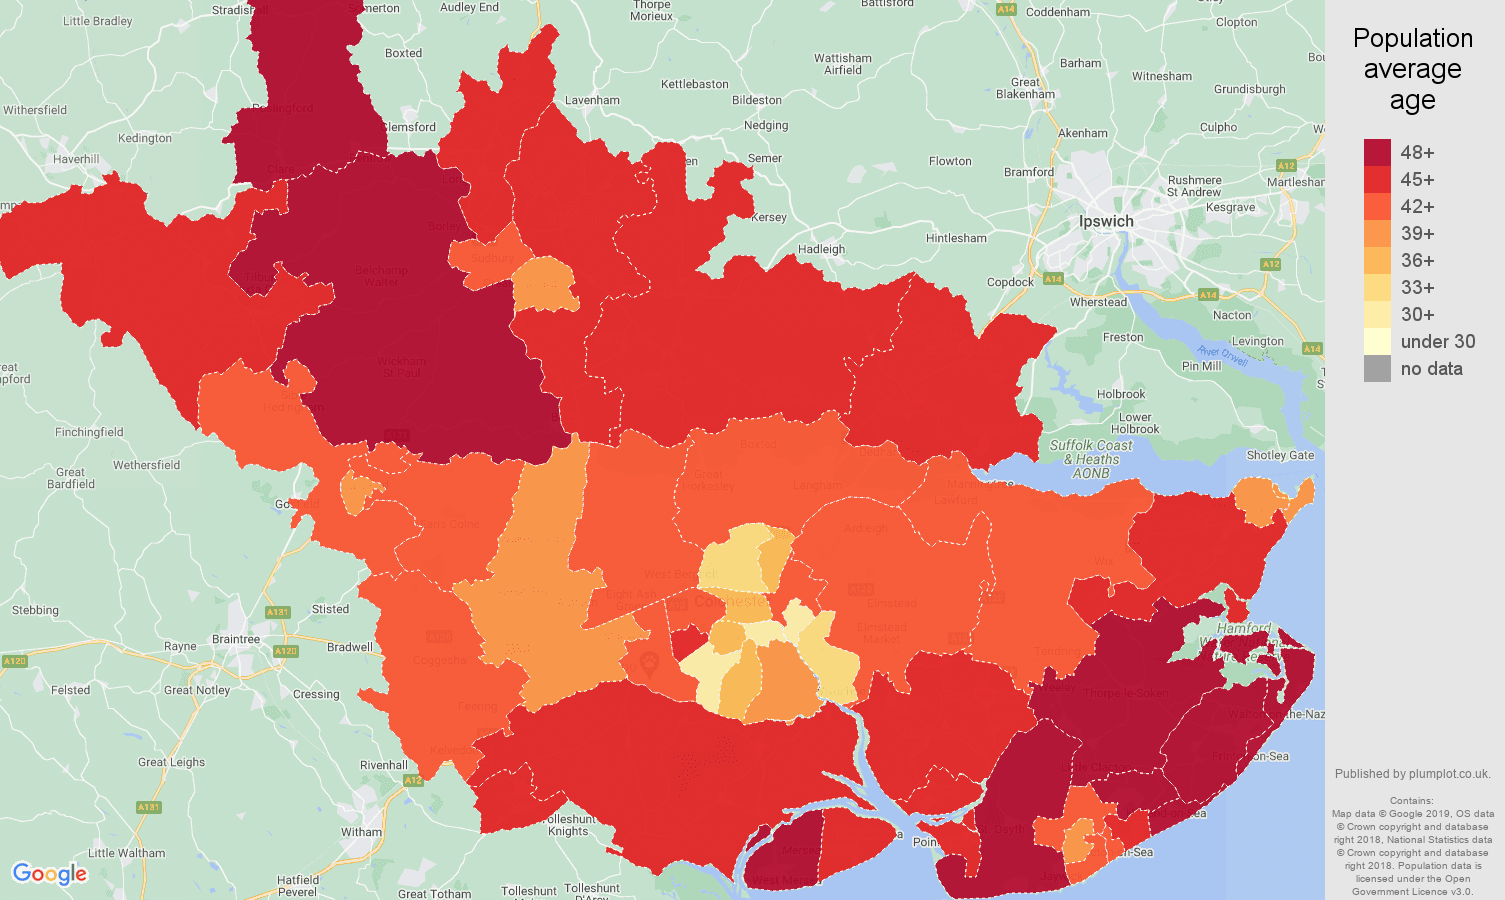 Colchester population average age map